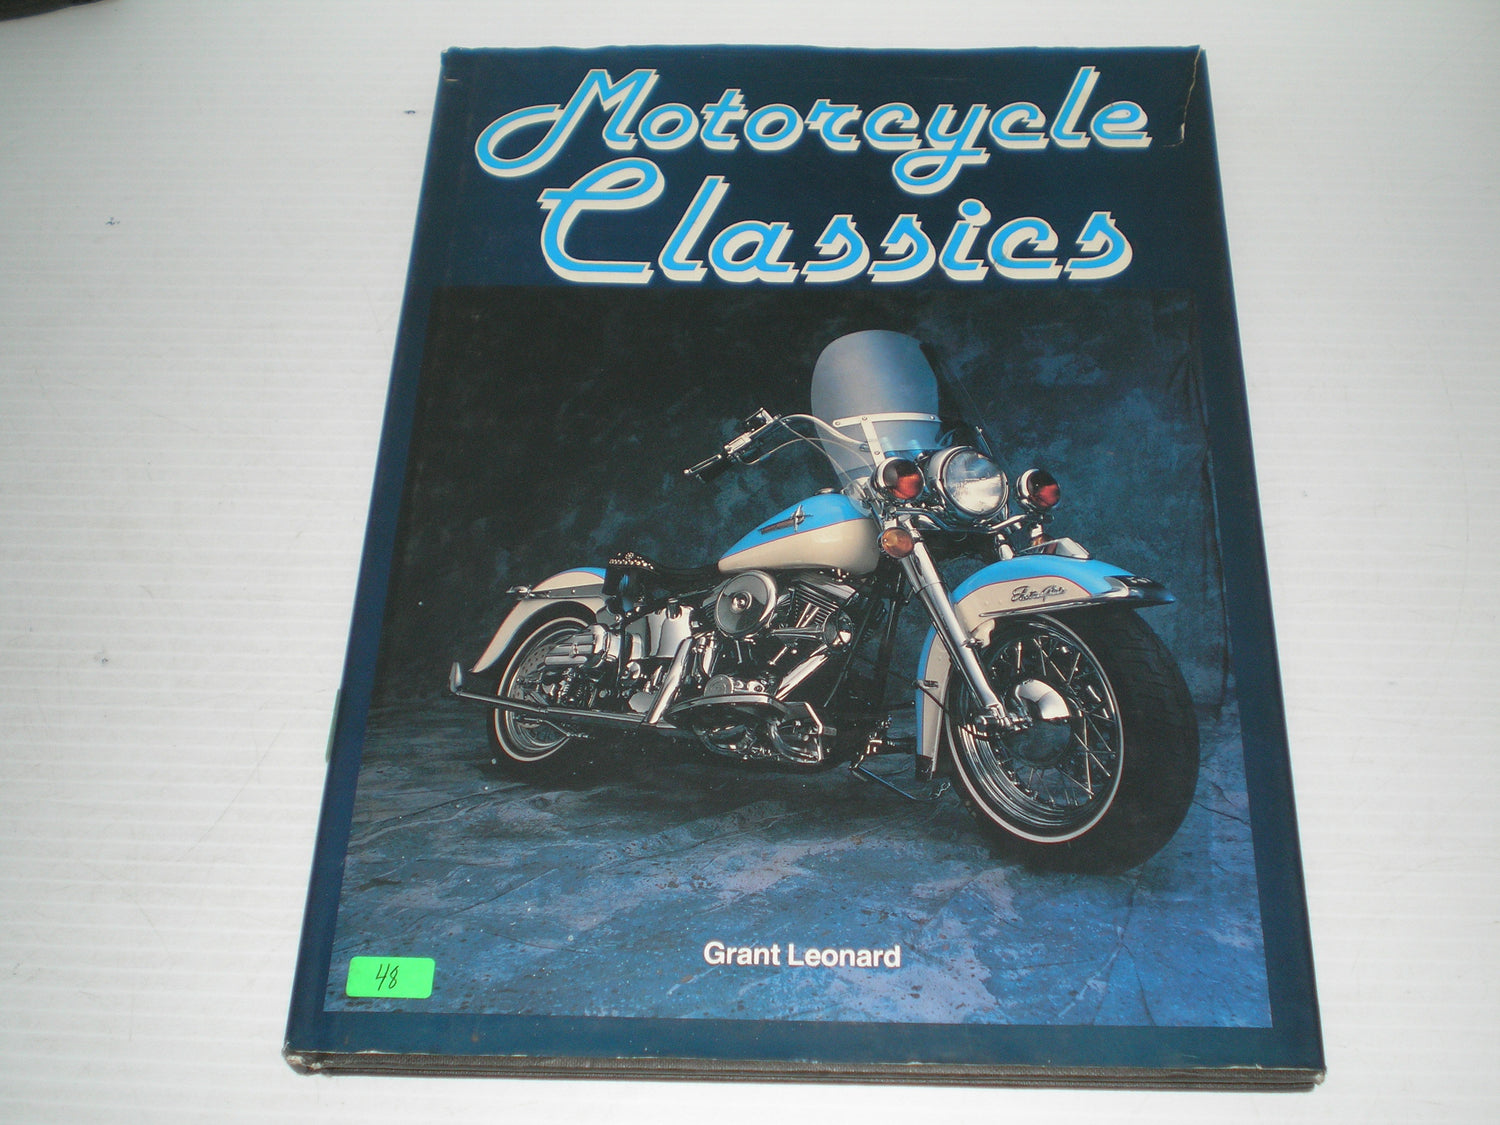 Harley Davidson Service Manual